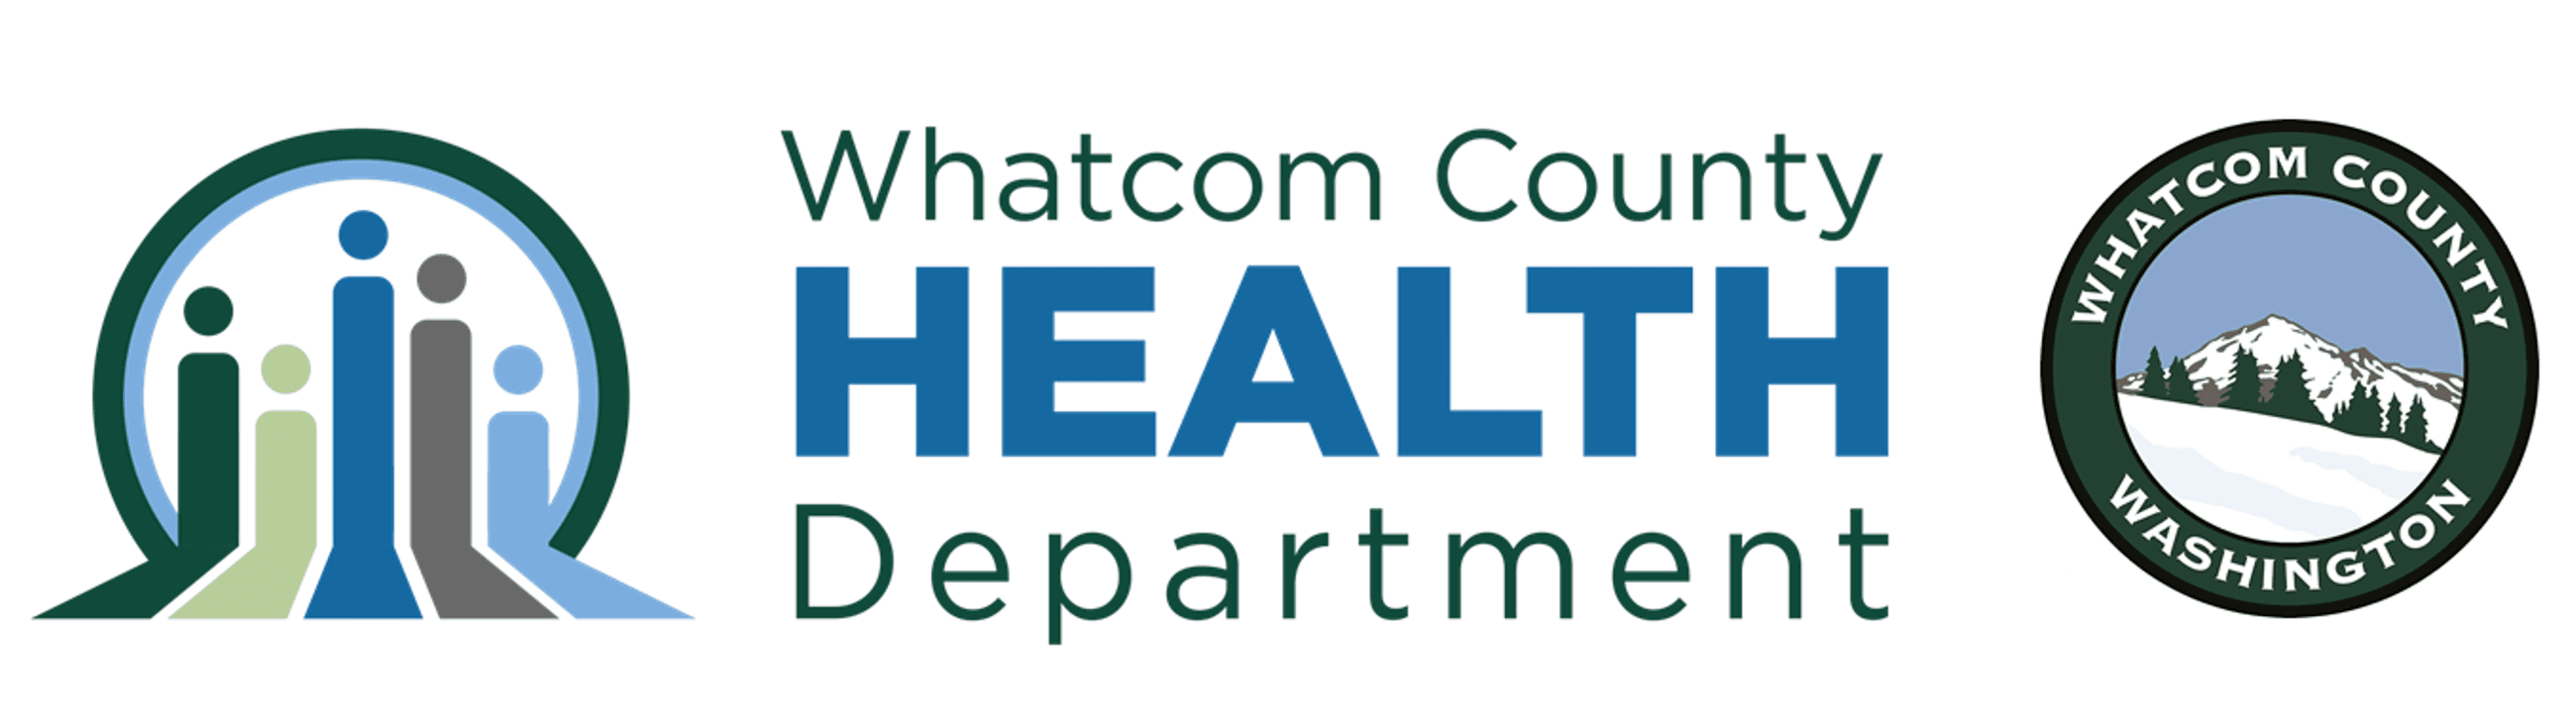 Whatcom County Logo - Health Department. Whatcom County, WA